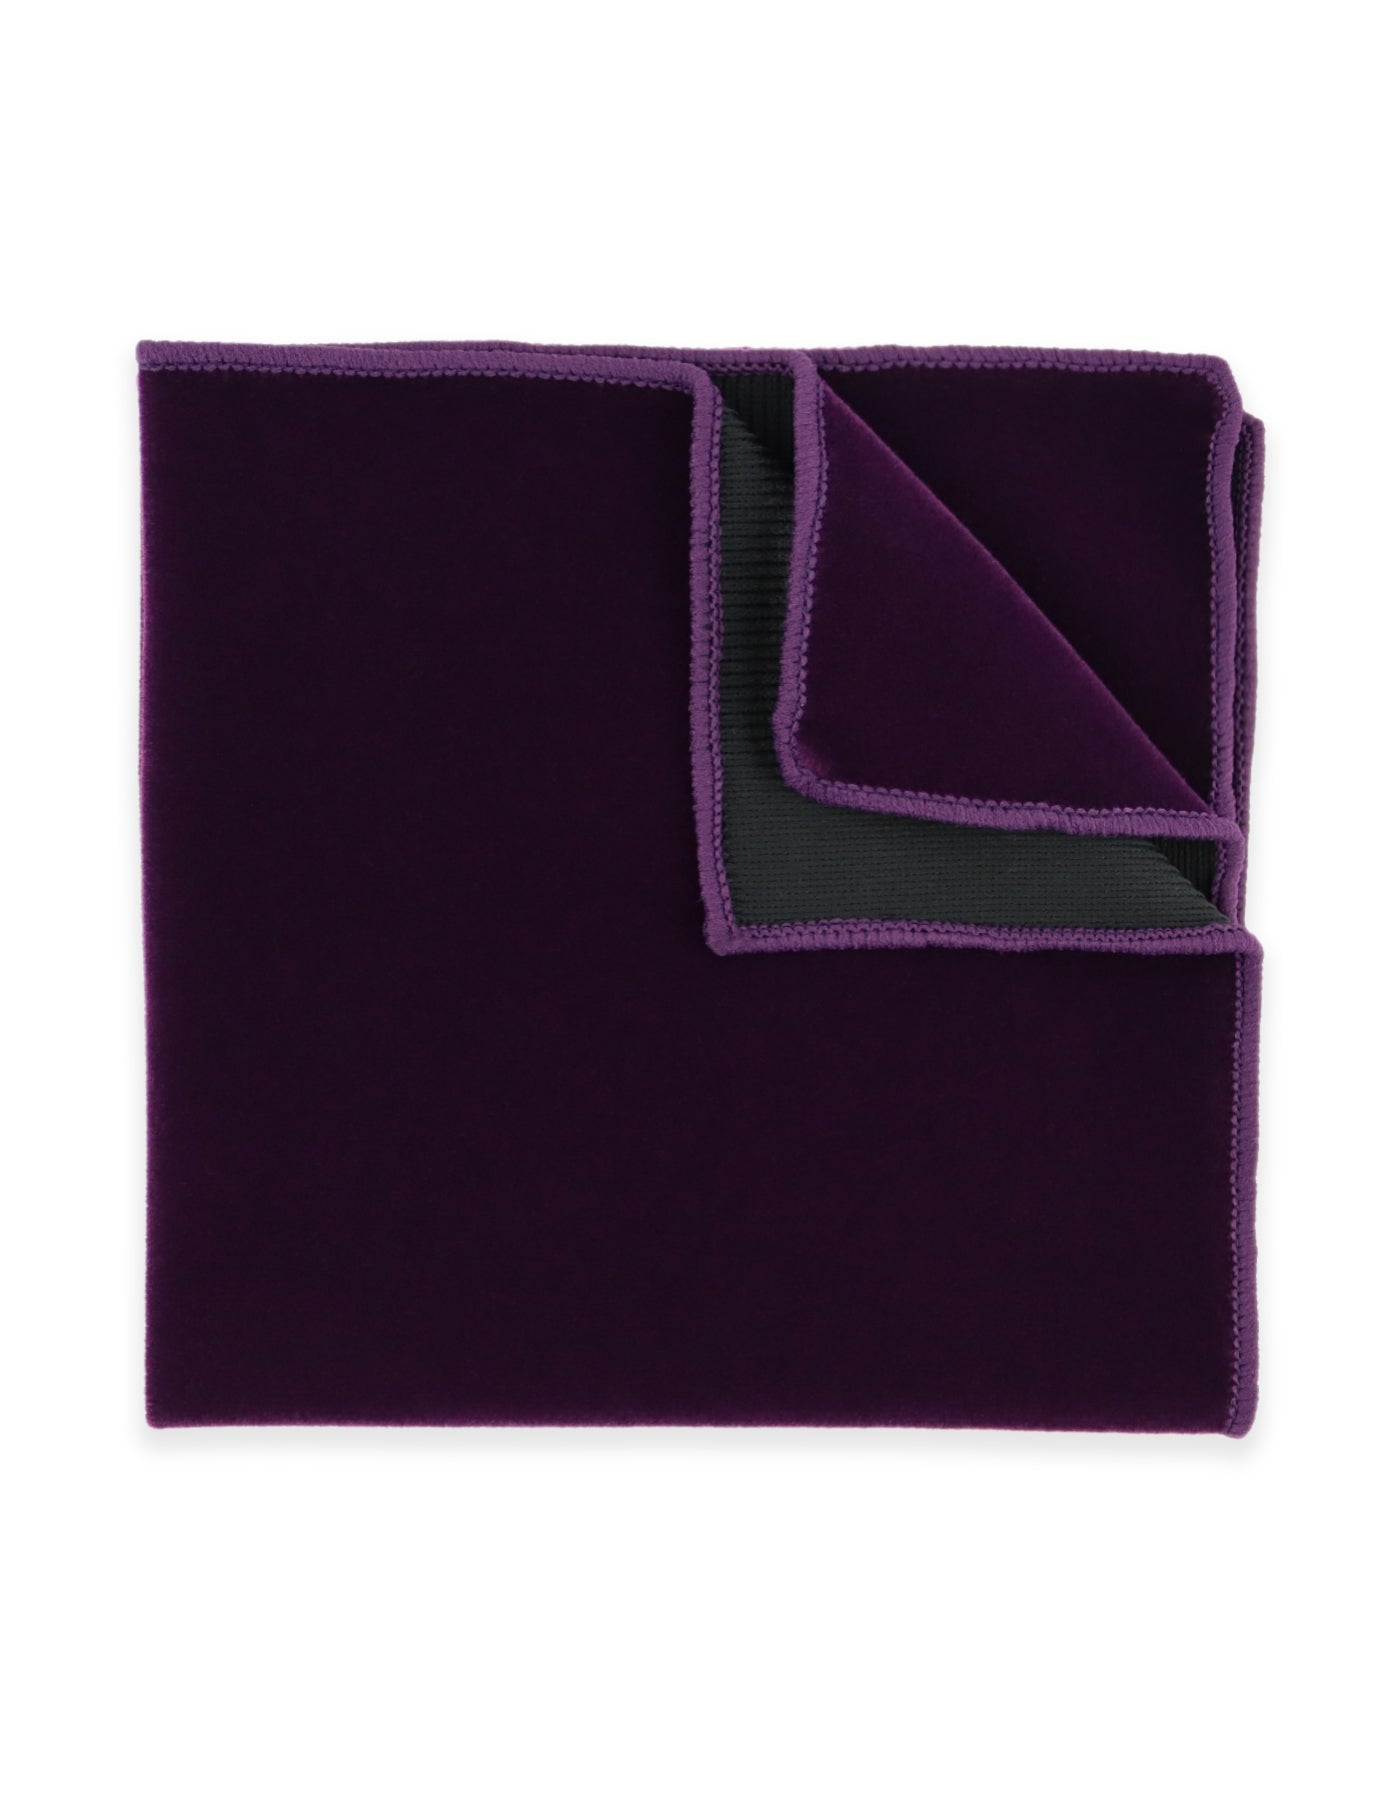 100% Velvet Oversized Bow Tie - Purple